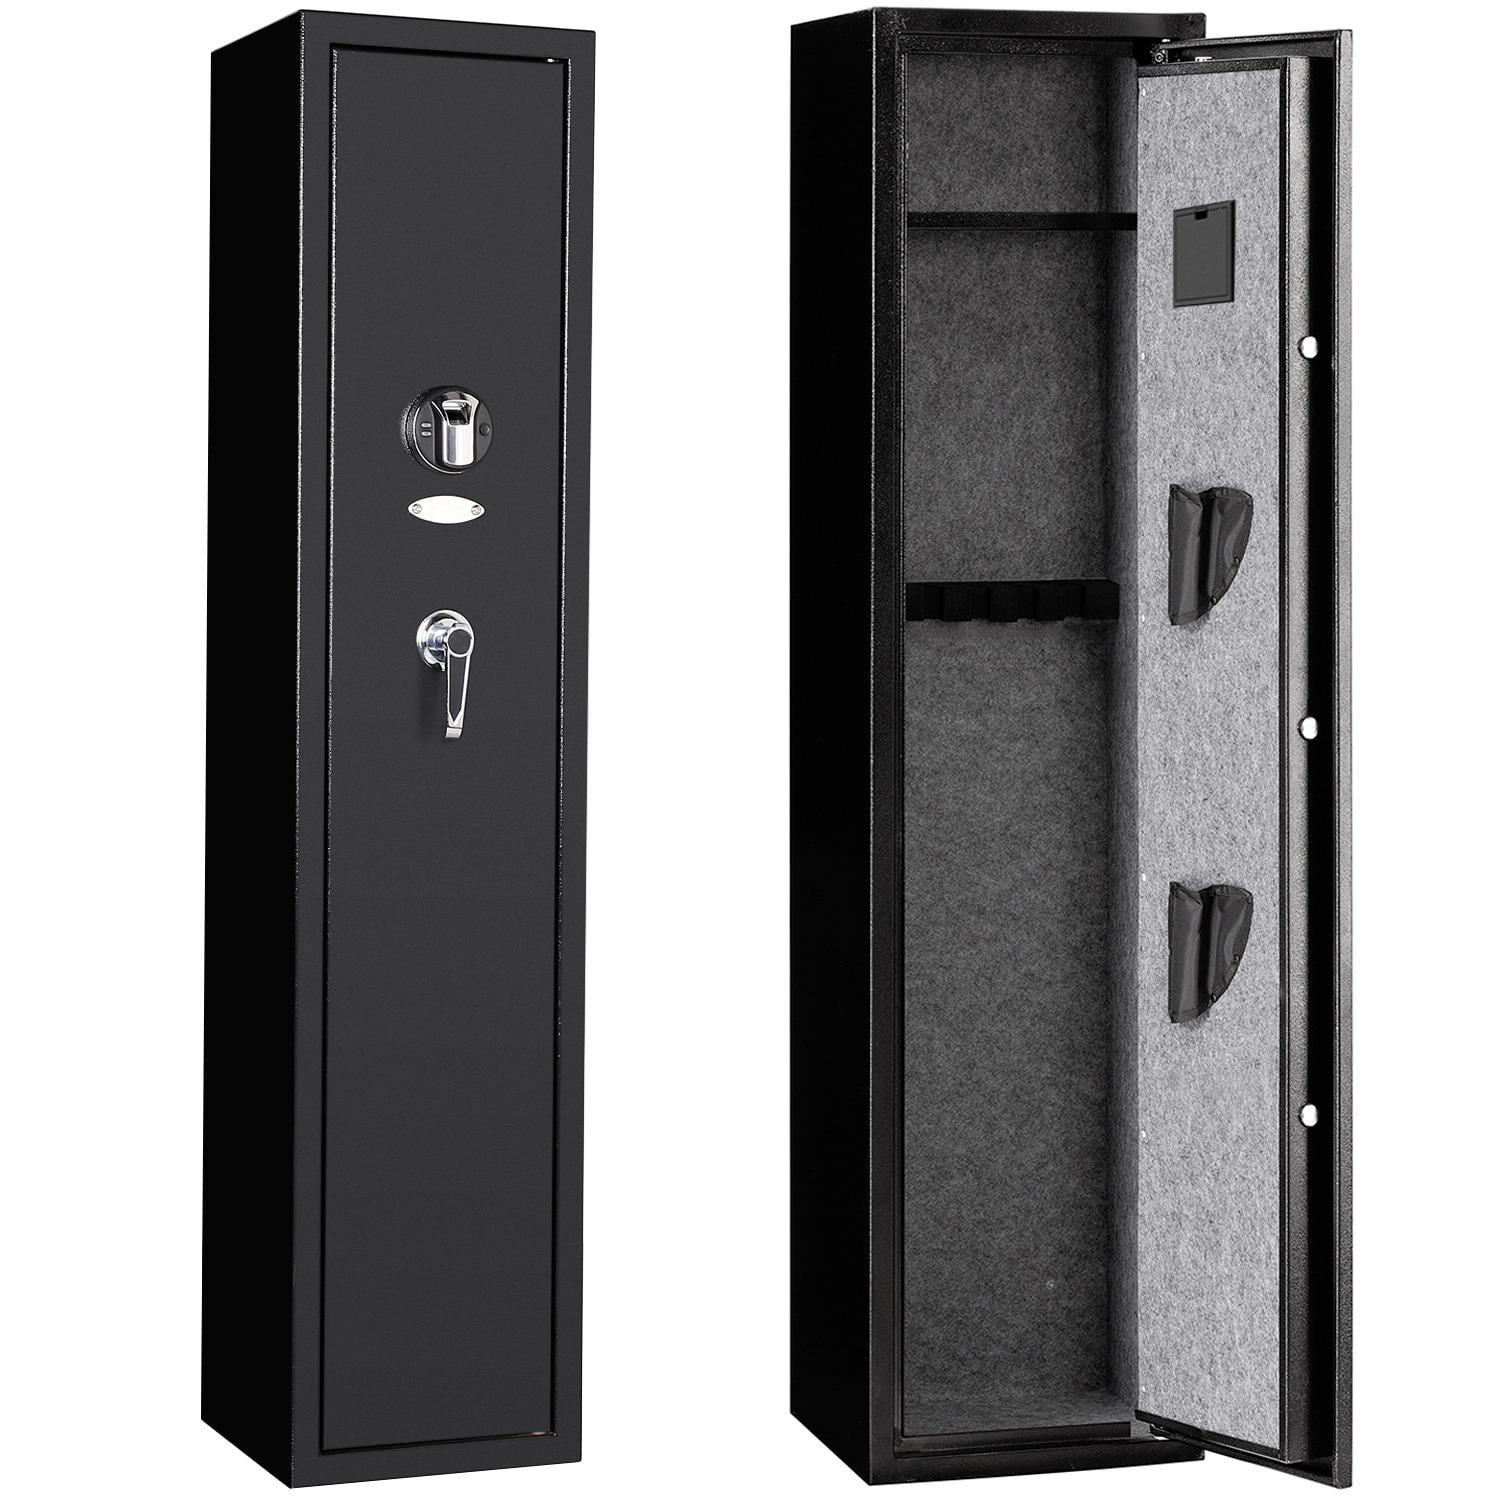 Details about   Fingerprint/Keypad Metal Gun Safe 4-5 Rifle 2 Handgun Storage Security Cabinet 